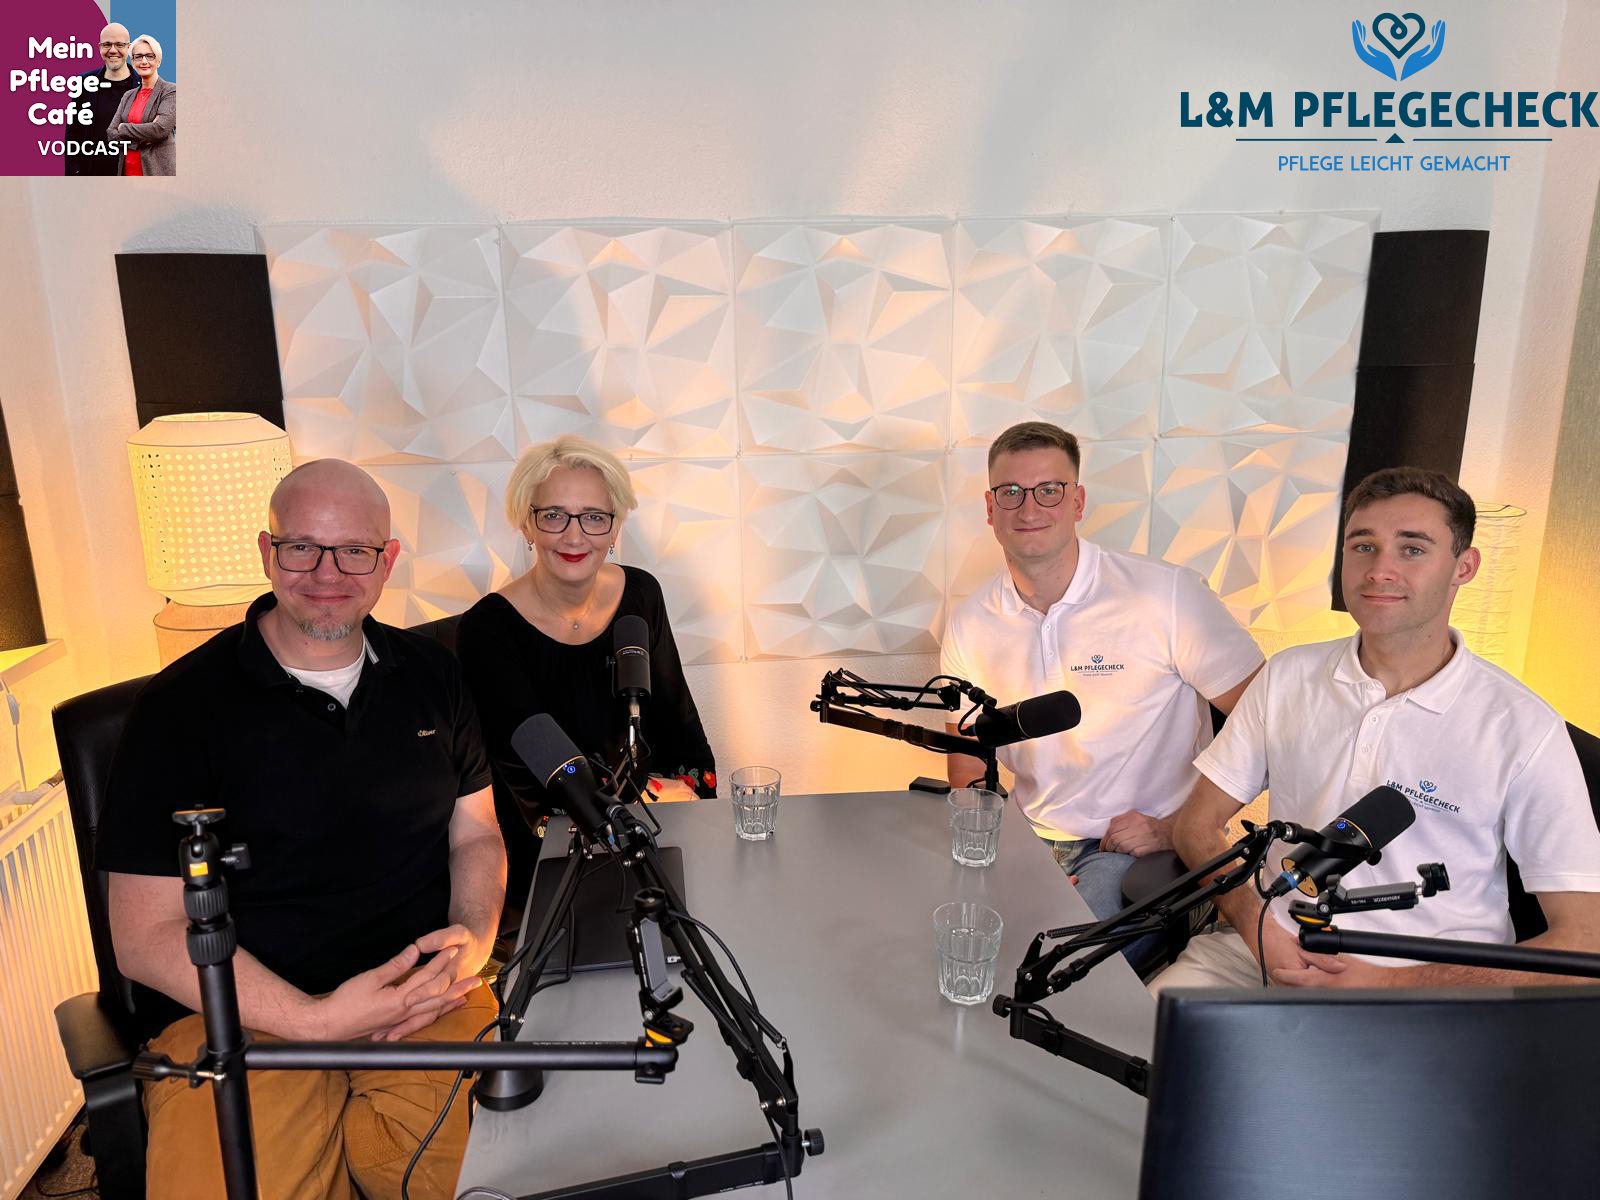 L&M Pflegecheck im Pflegecafé-Podcast: Unsere Vision